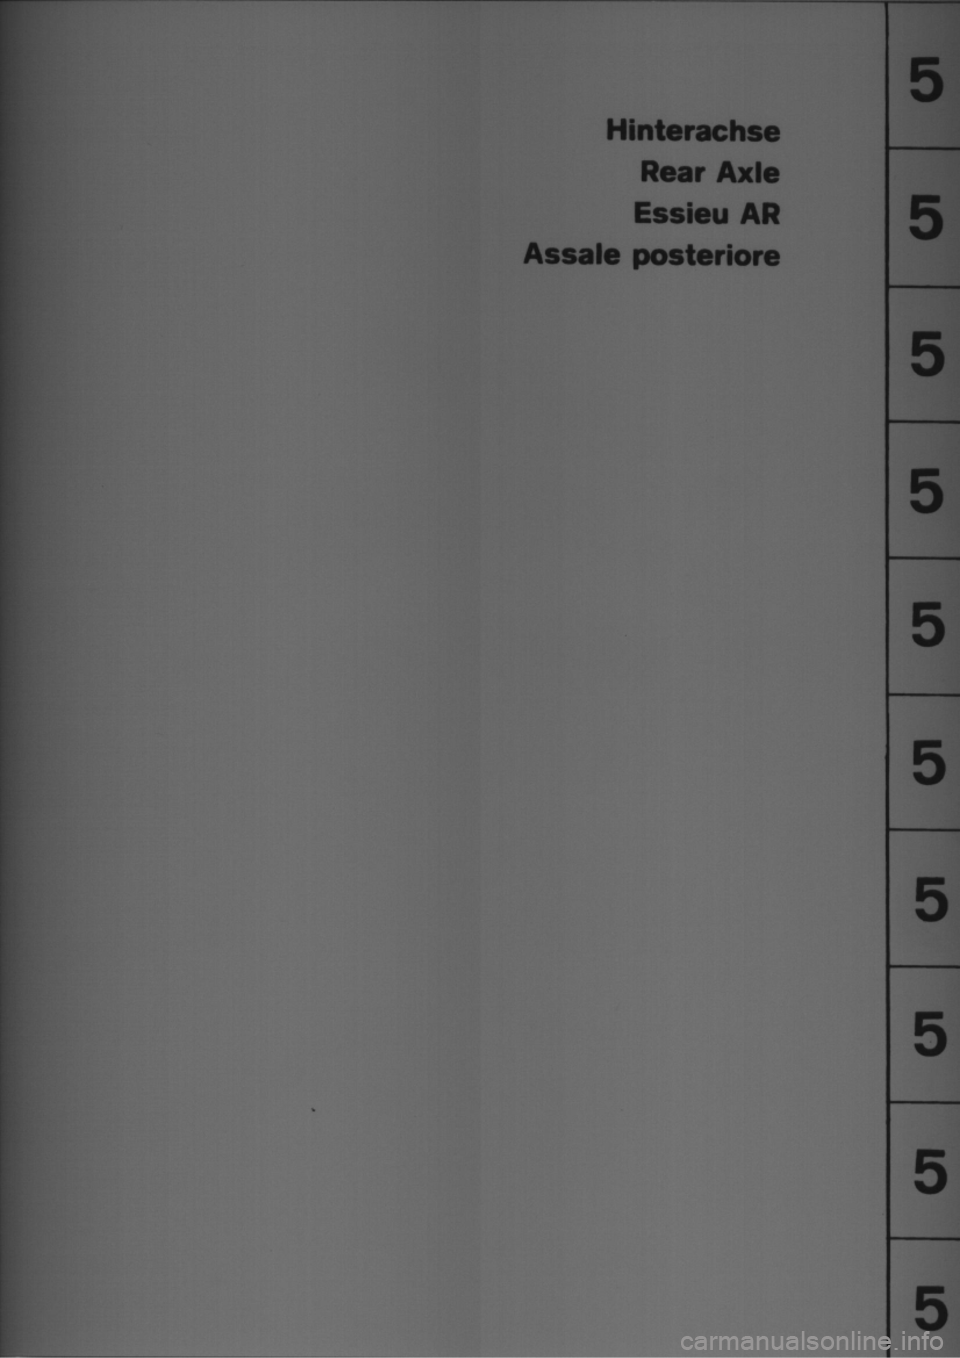 PORSCHE 914 1971 1.G Rear Axle Workshop Manual 